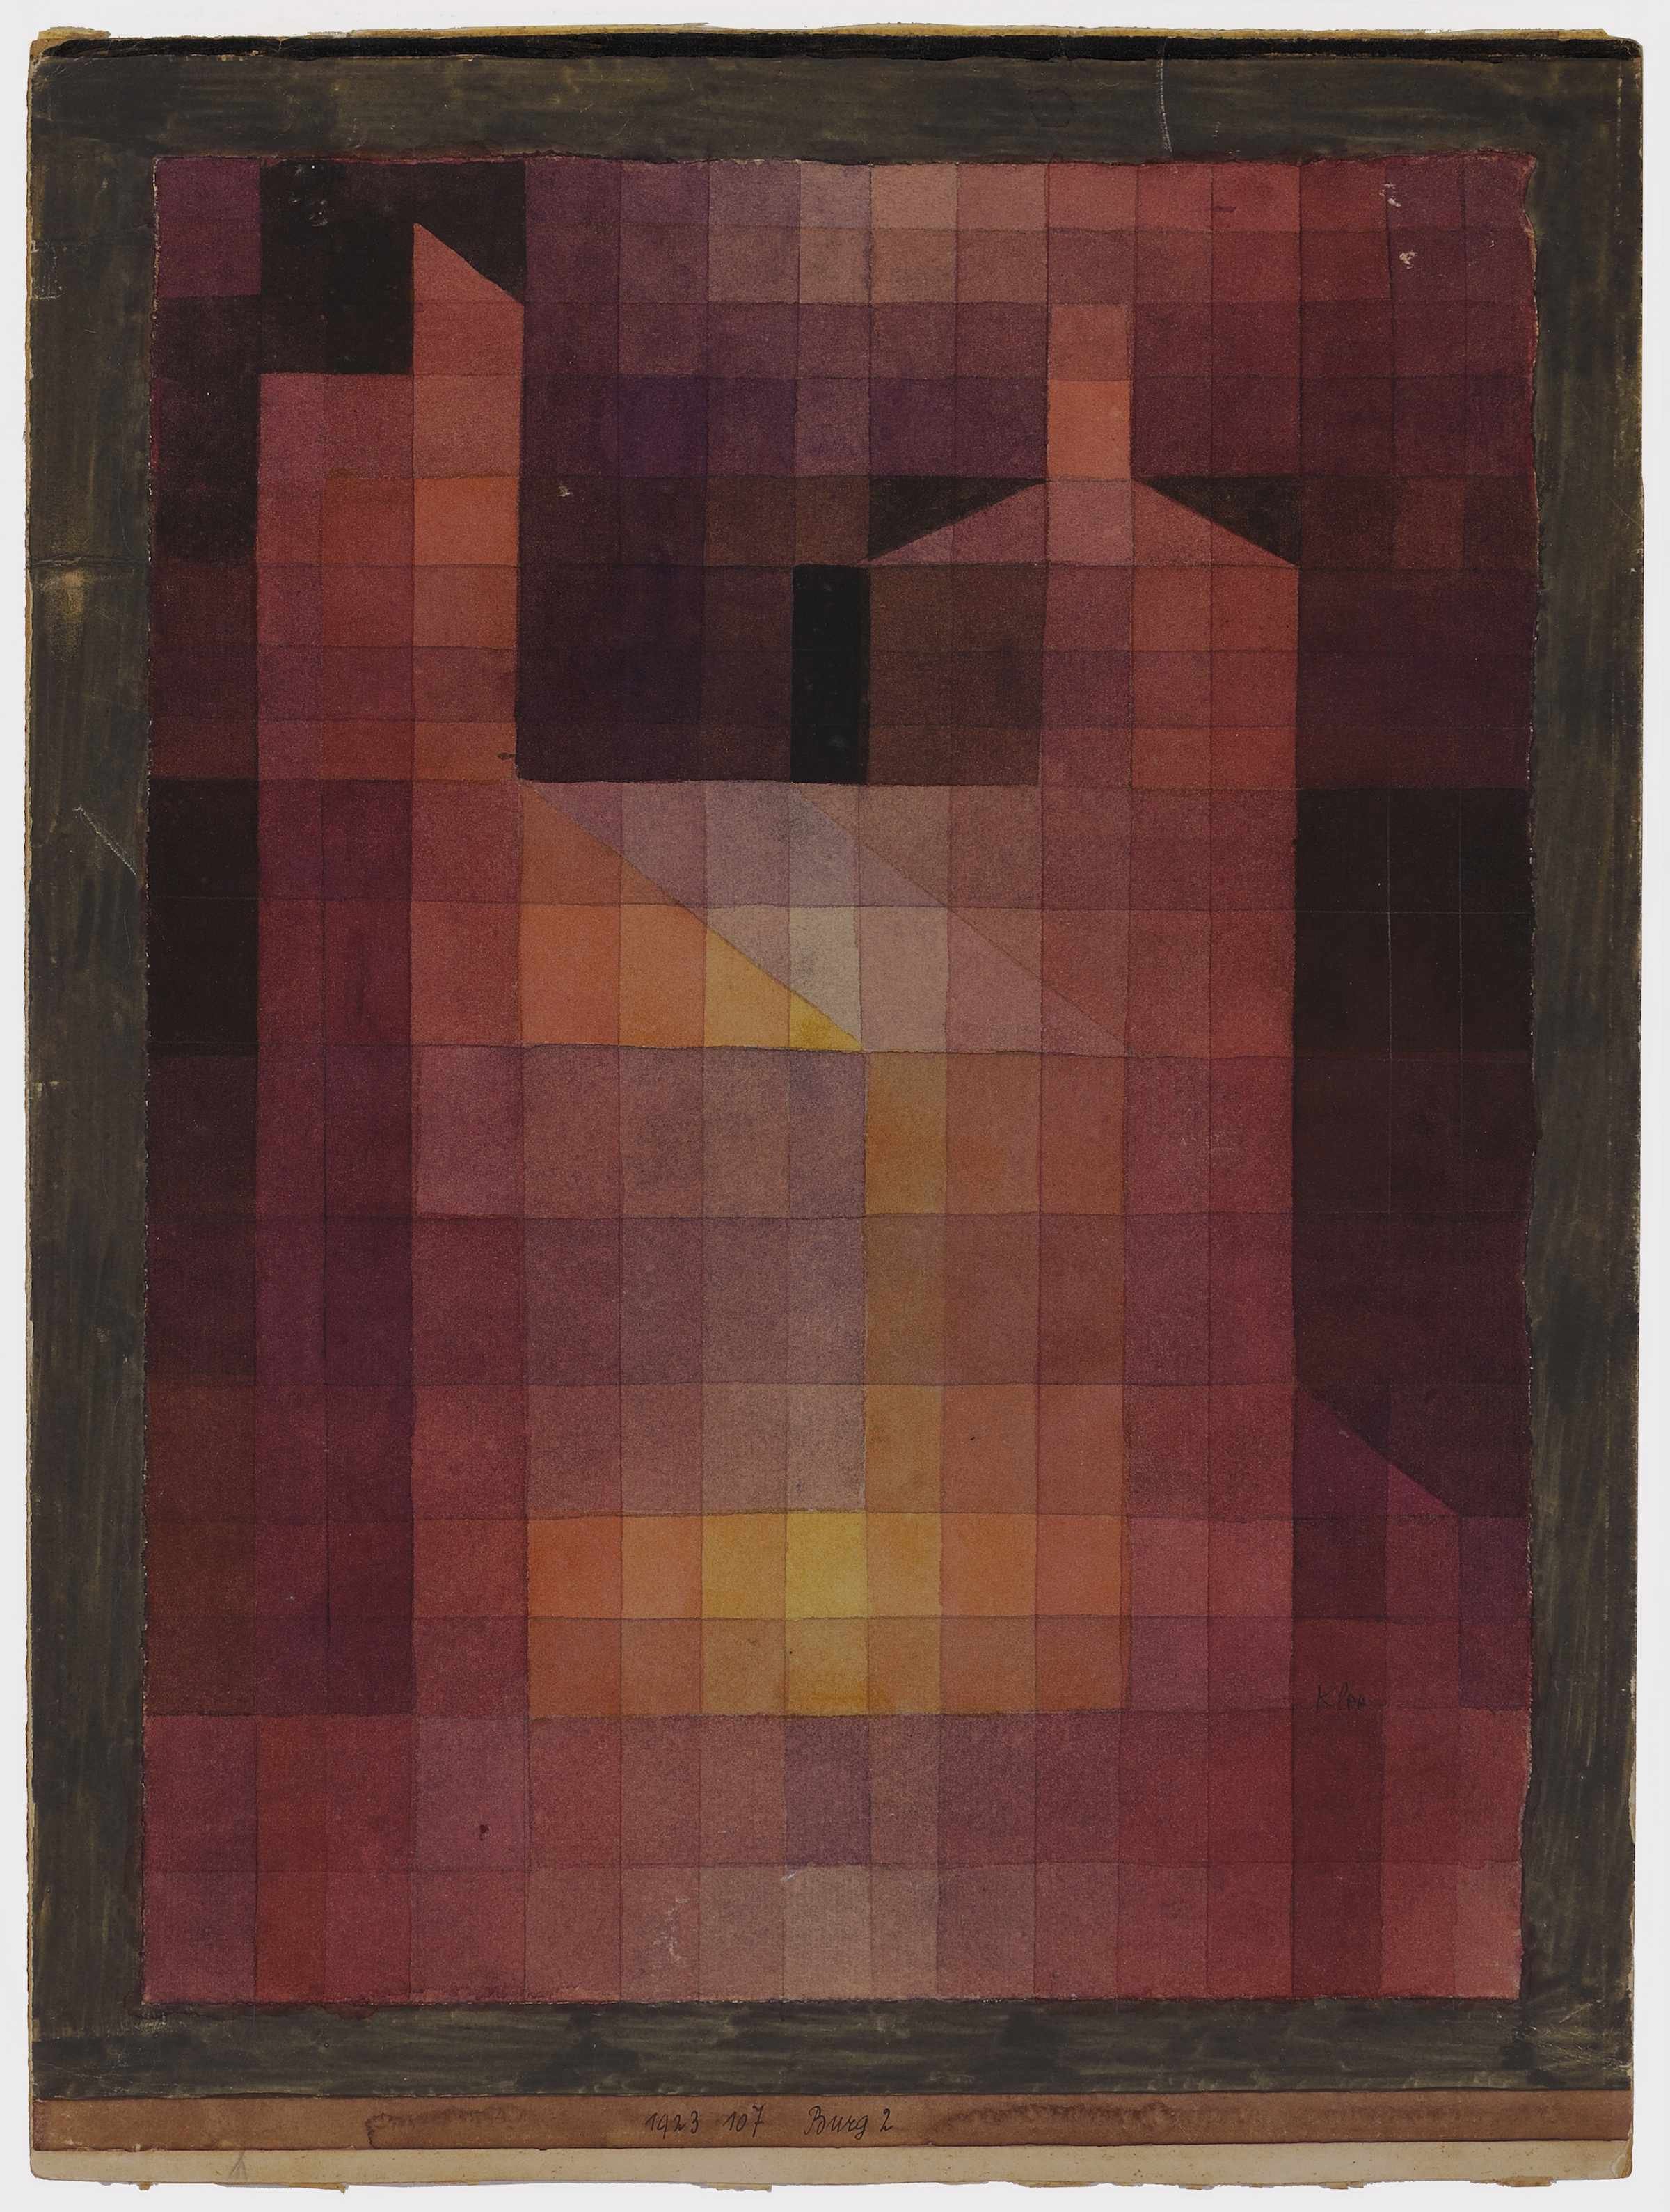 Abb. 1: Paul Klee, Burg 2, 1923, 107